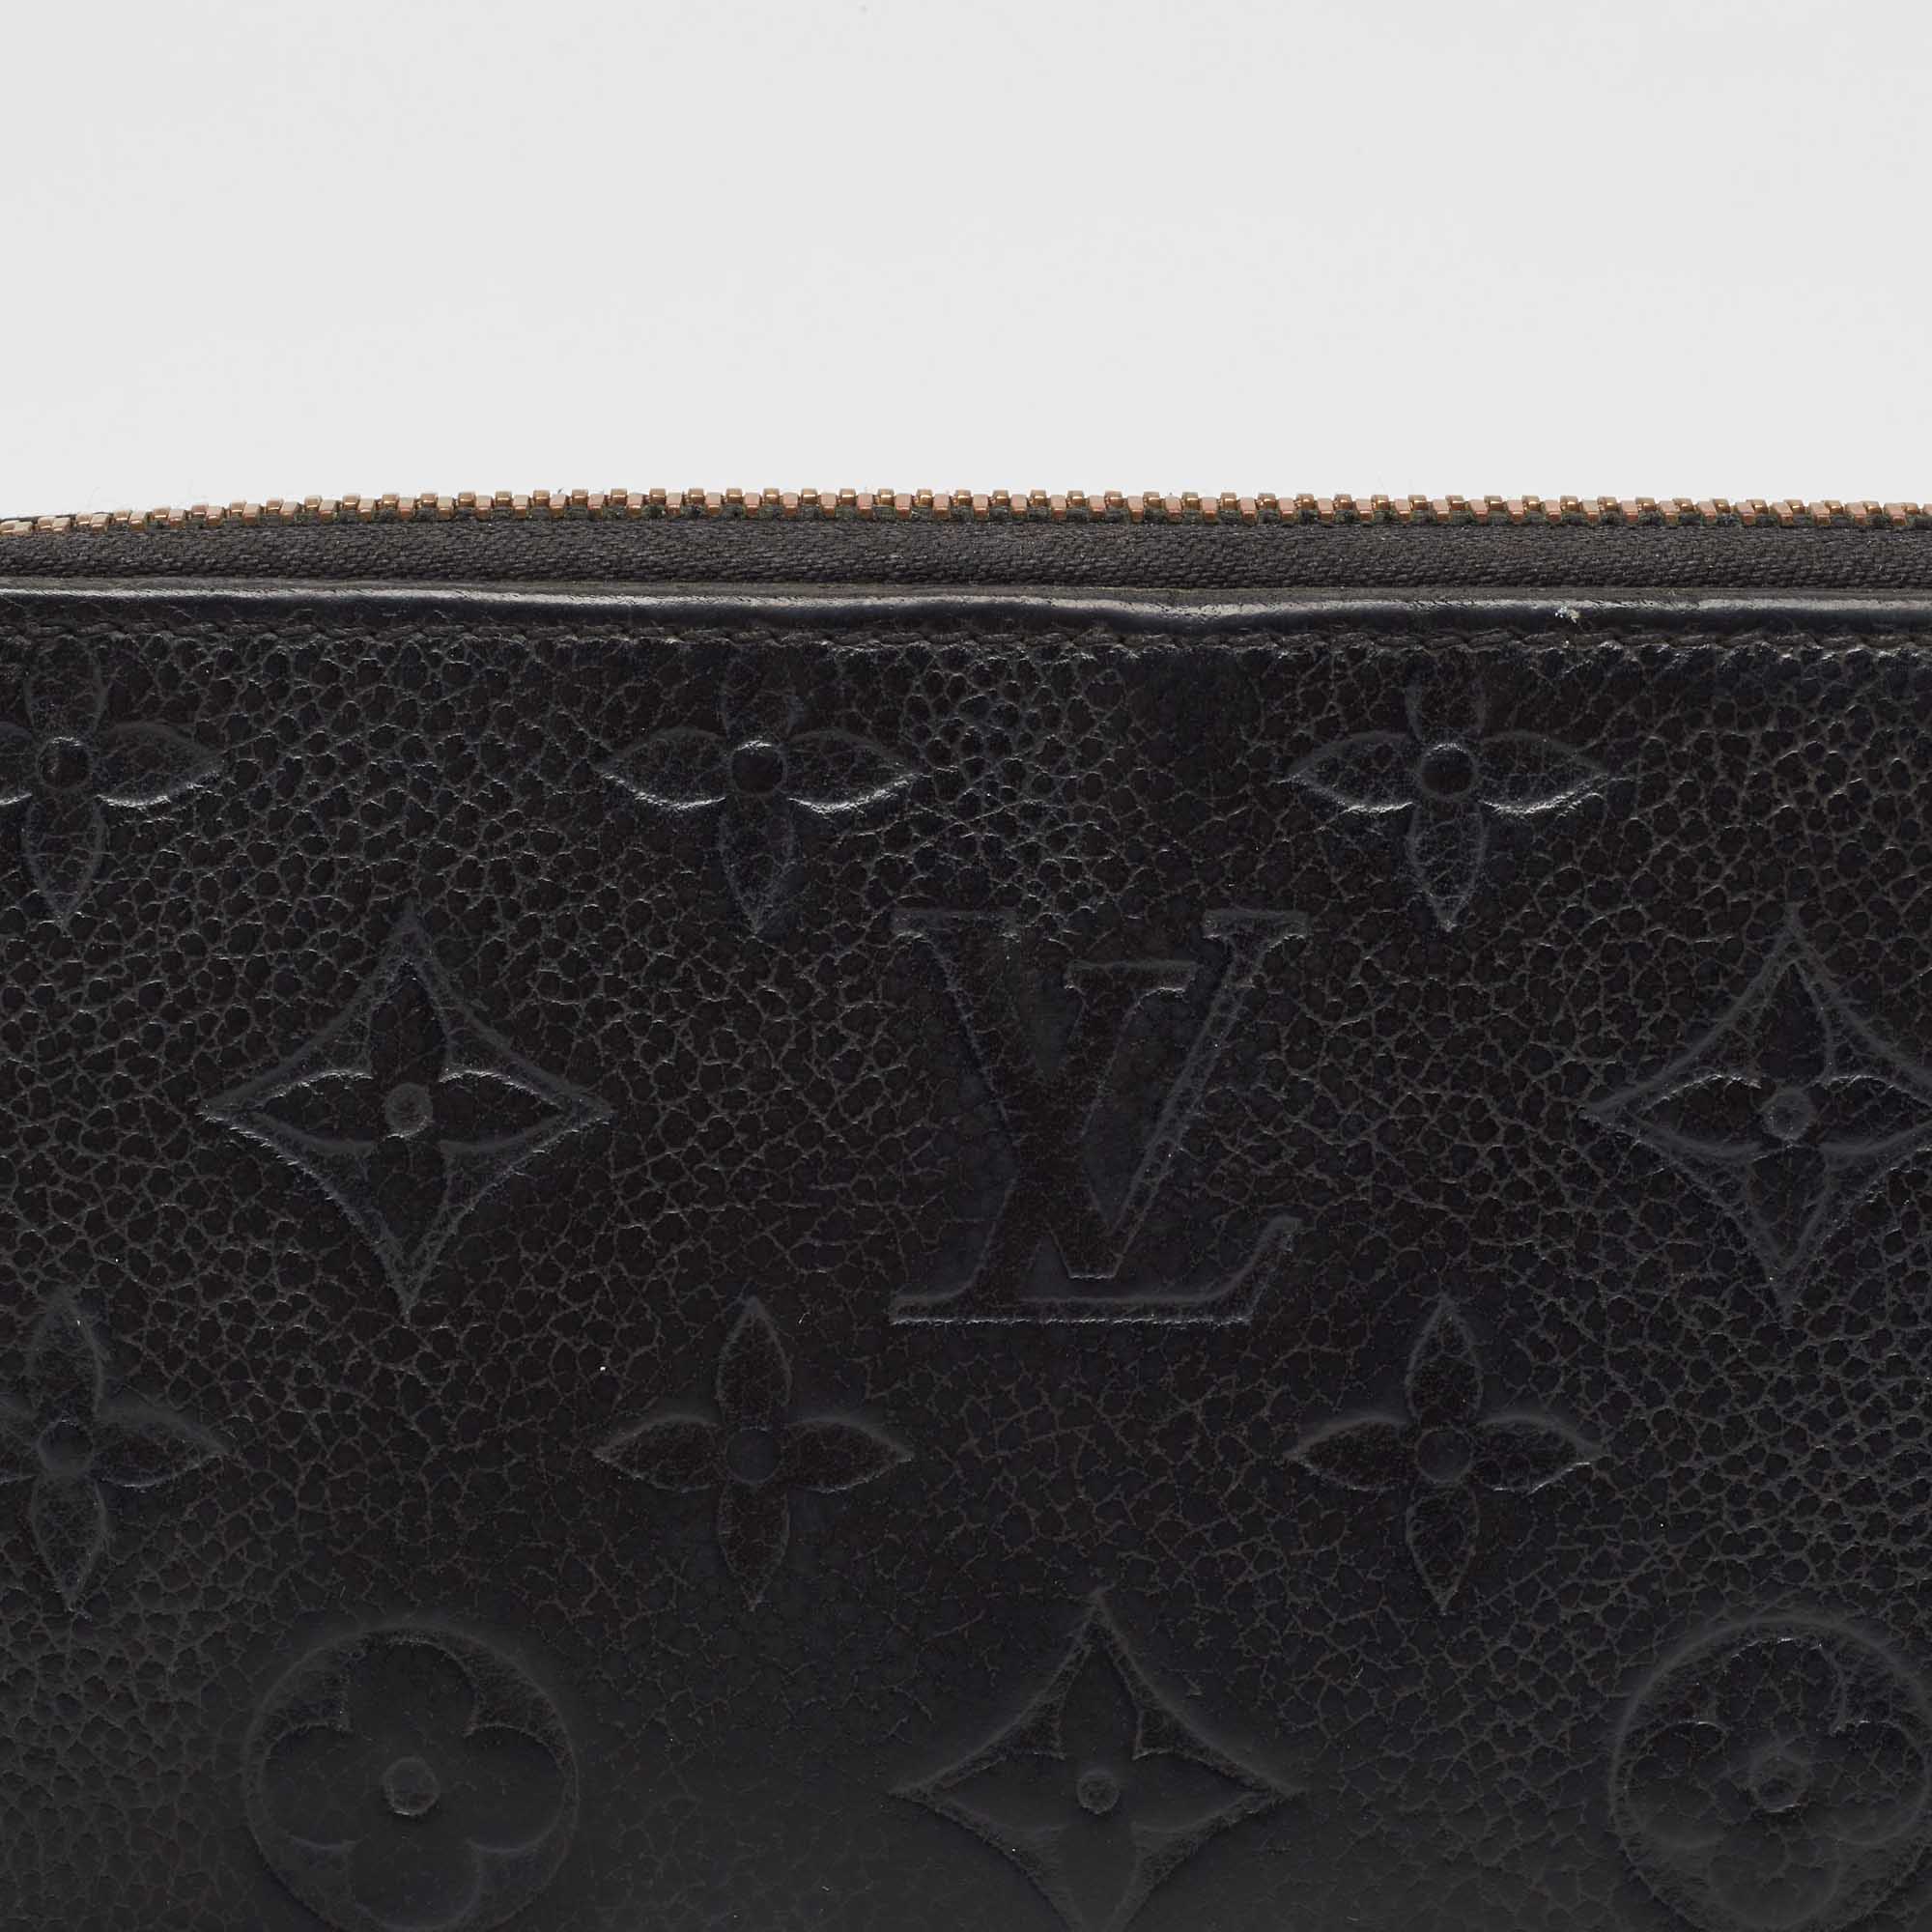 Louis Vuitton Black Monogram Empreinte Leather Zippy Wallet